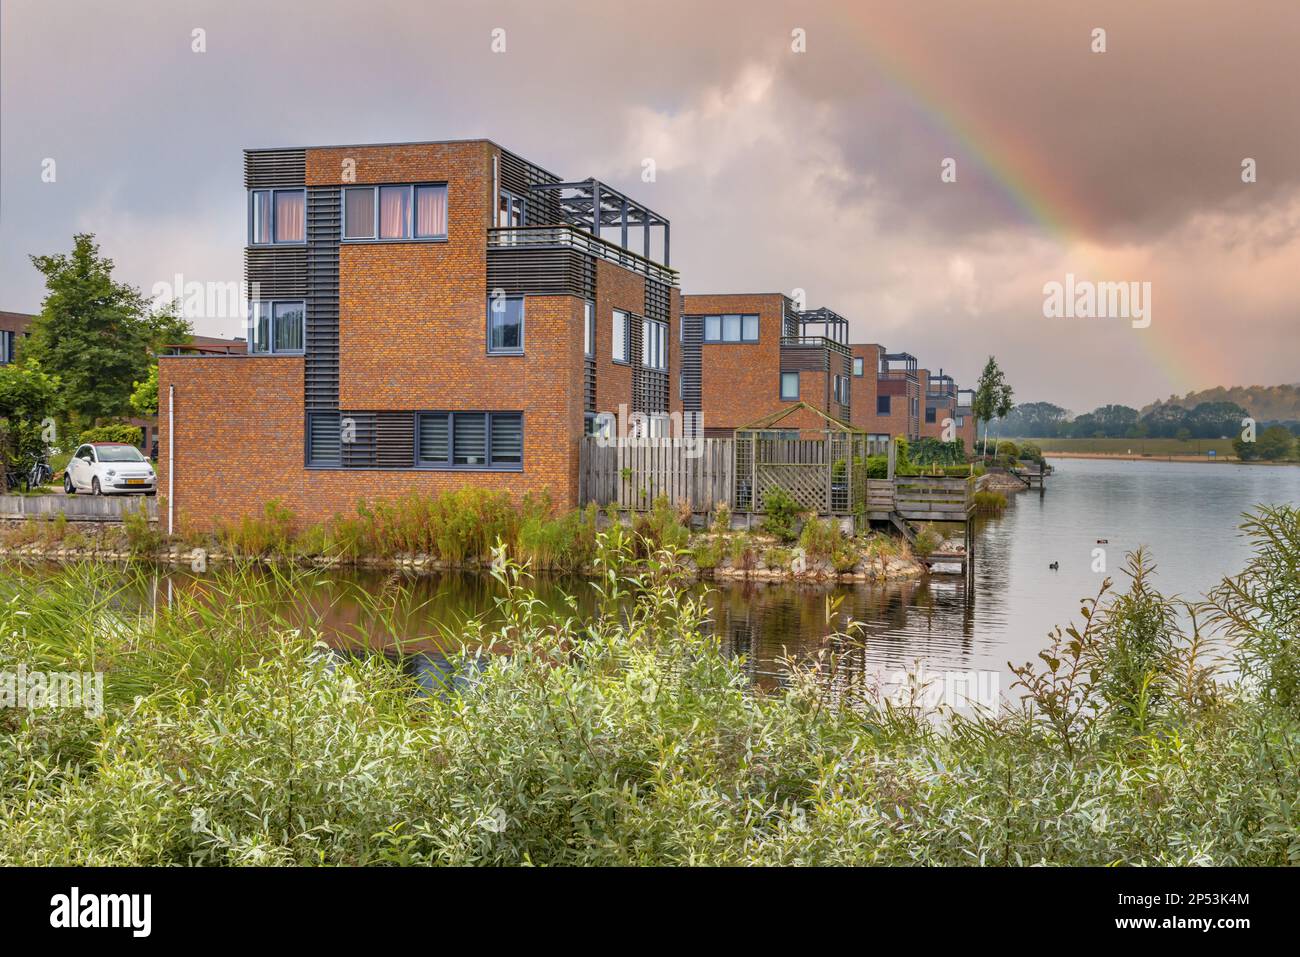 Häuser am Wasserrand in Wohngebieten in den Niederlanden. Unter bewölktem Himmel mit Regenbogen. Heerhugowaard, Niederlande. Stockfoto